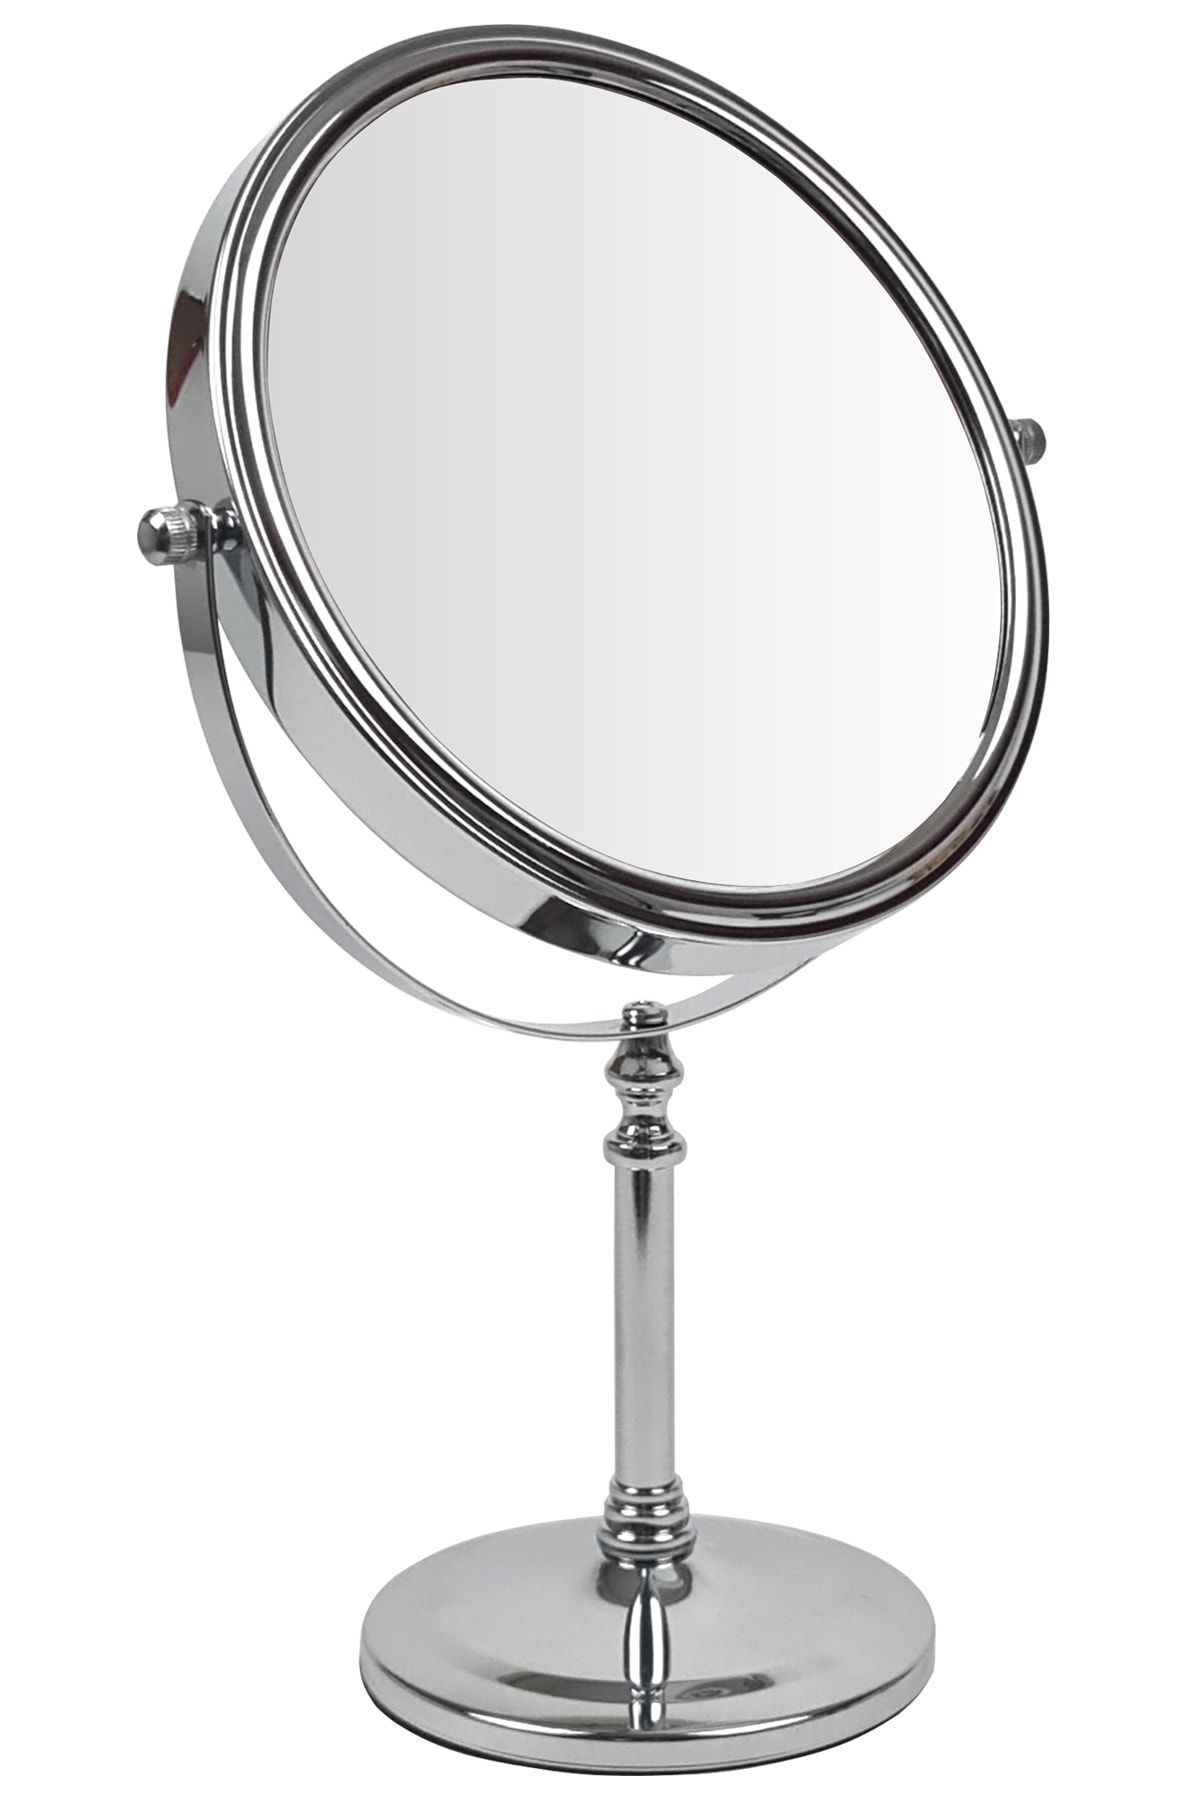 Binbirreyon Büyük Boy Krom Makyaj Aynası Çift Taraflı Ayaklı Masa Aynası 5x Büyüteçli 35cm Mb030